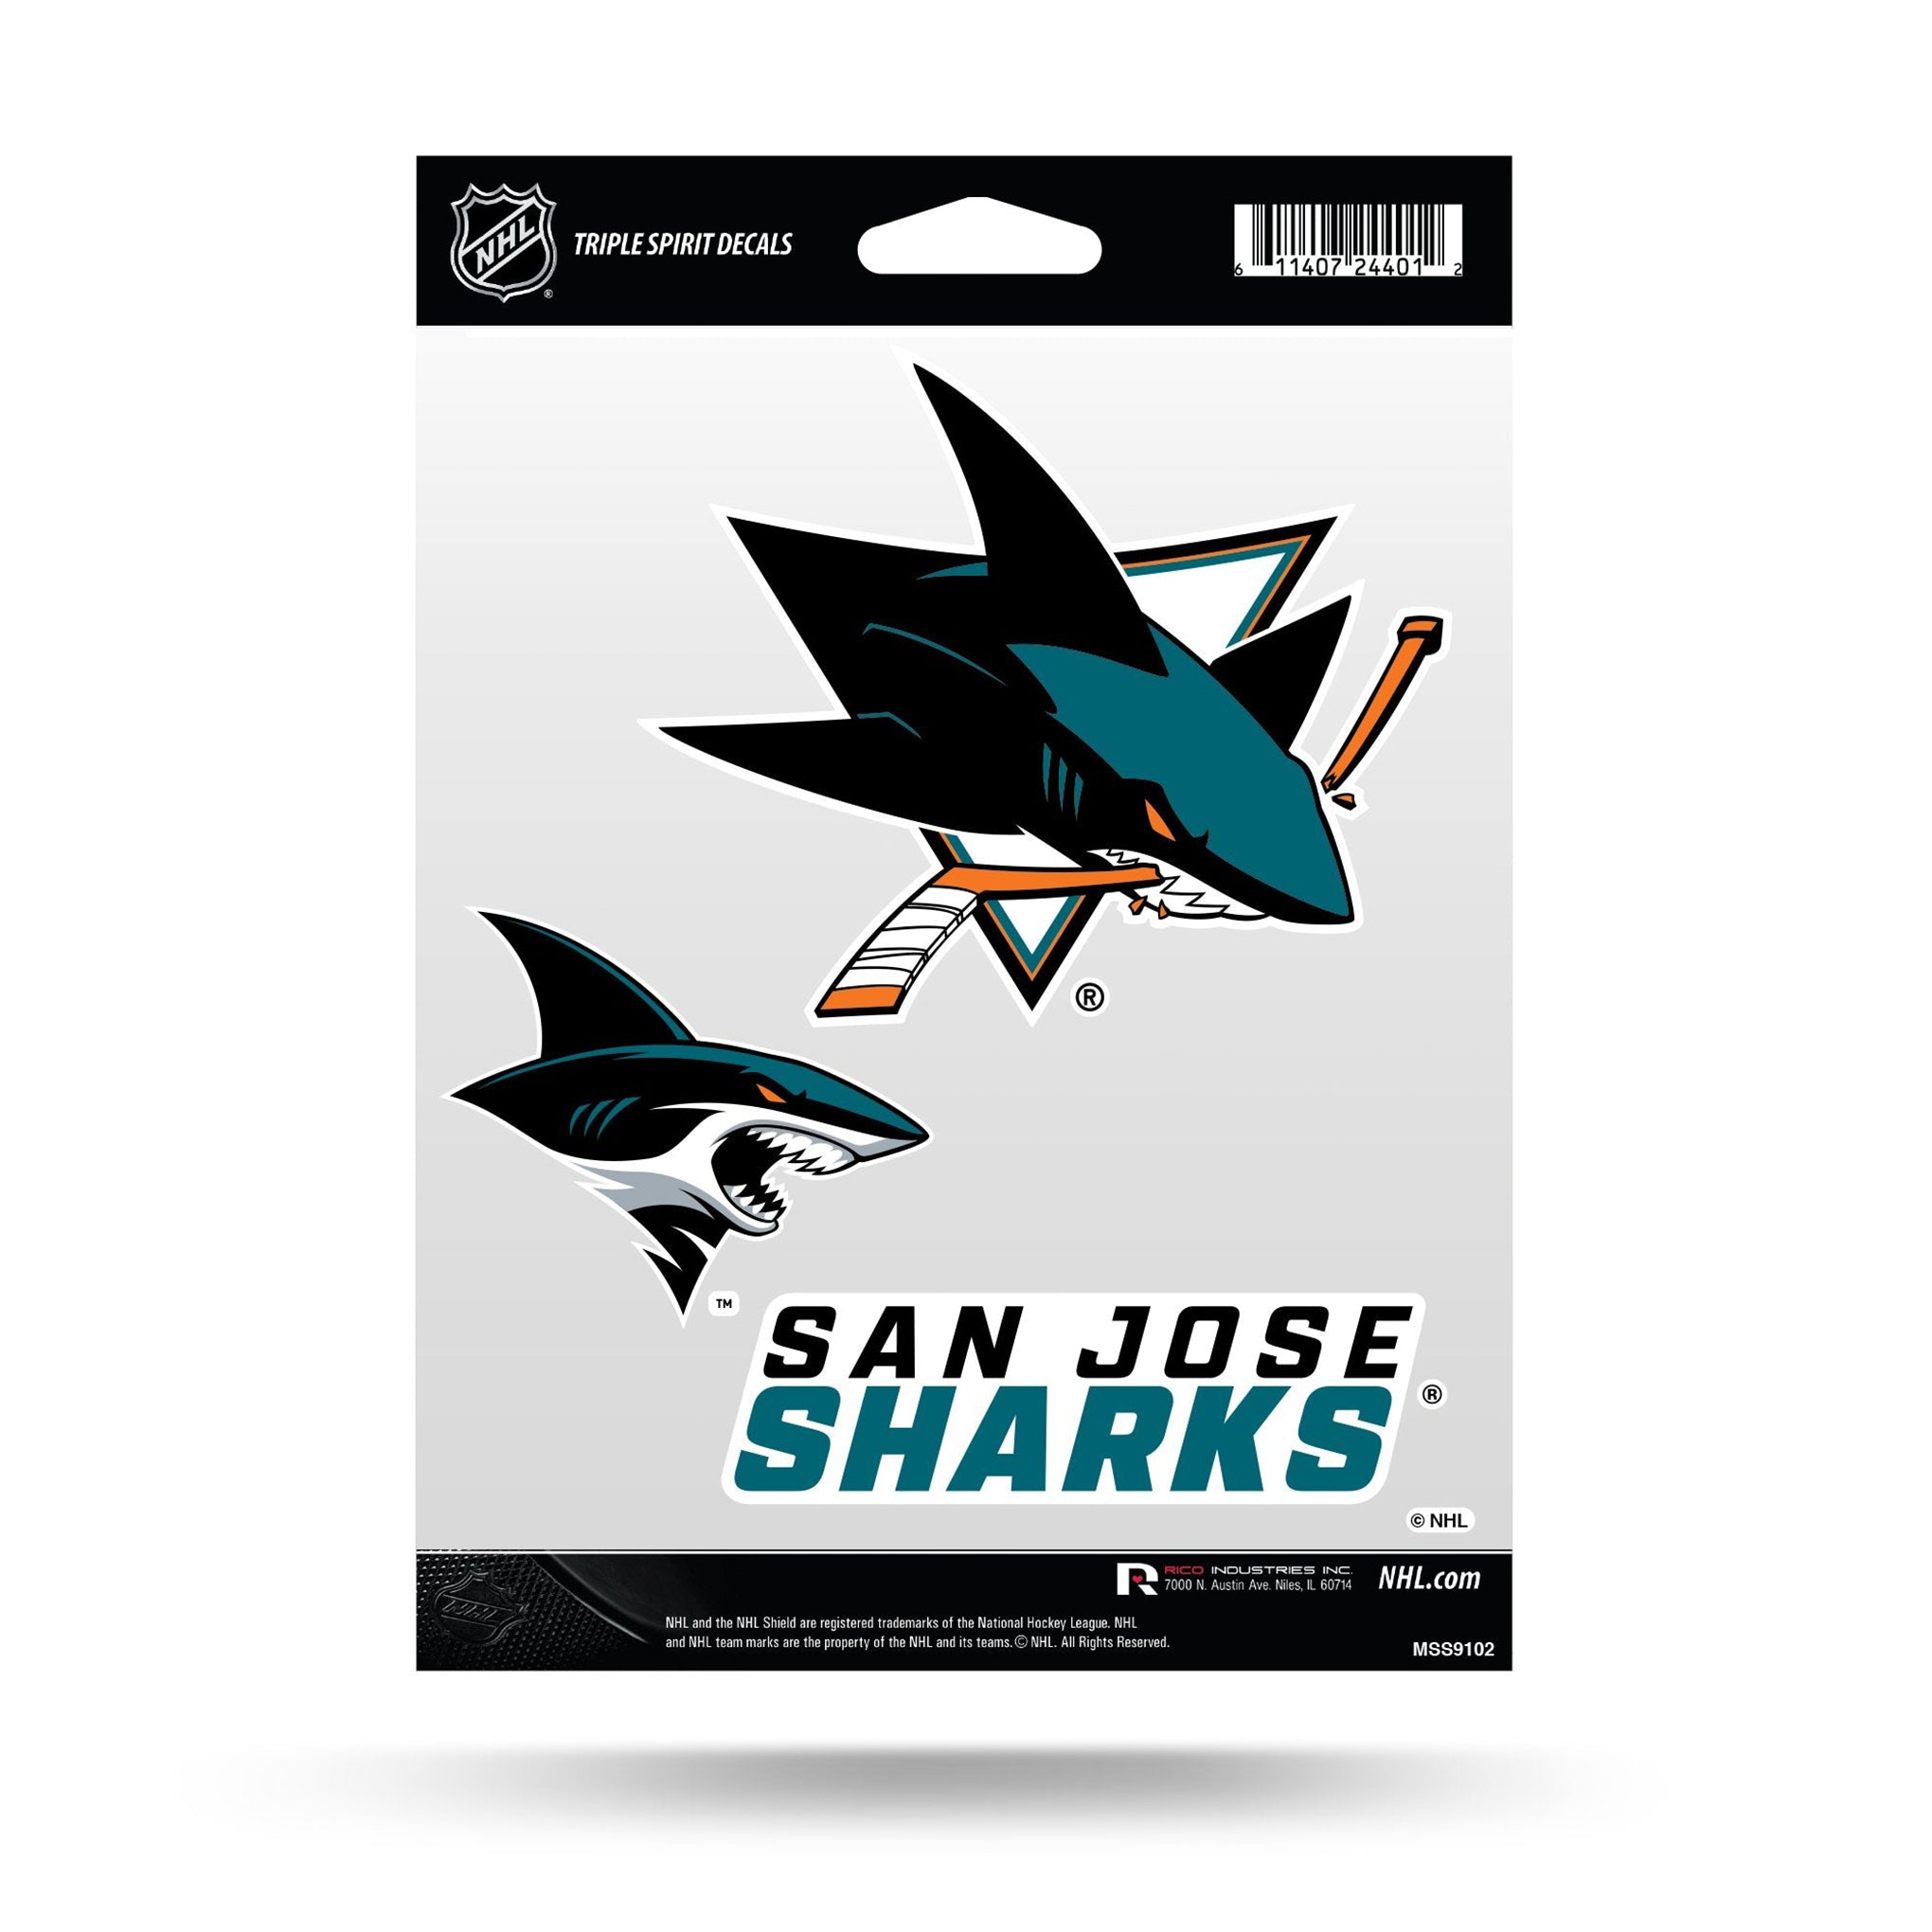 San Jose Sharks Team Shop in NHL Fan Shop 